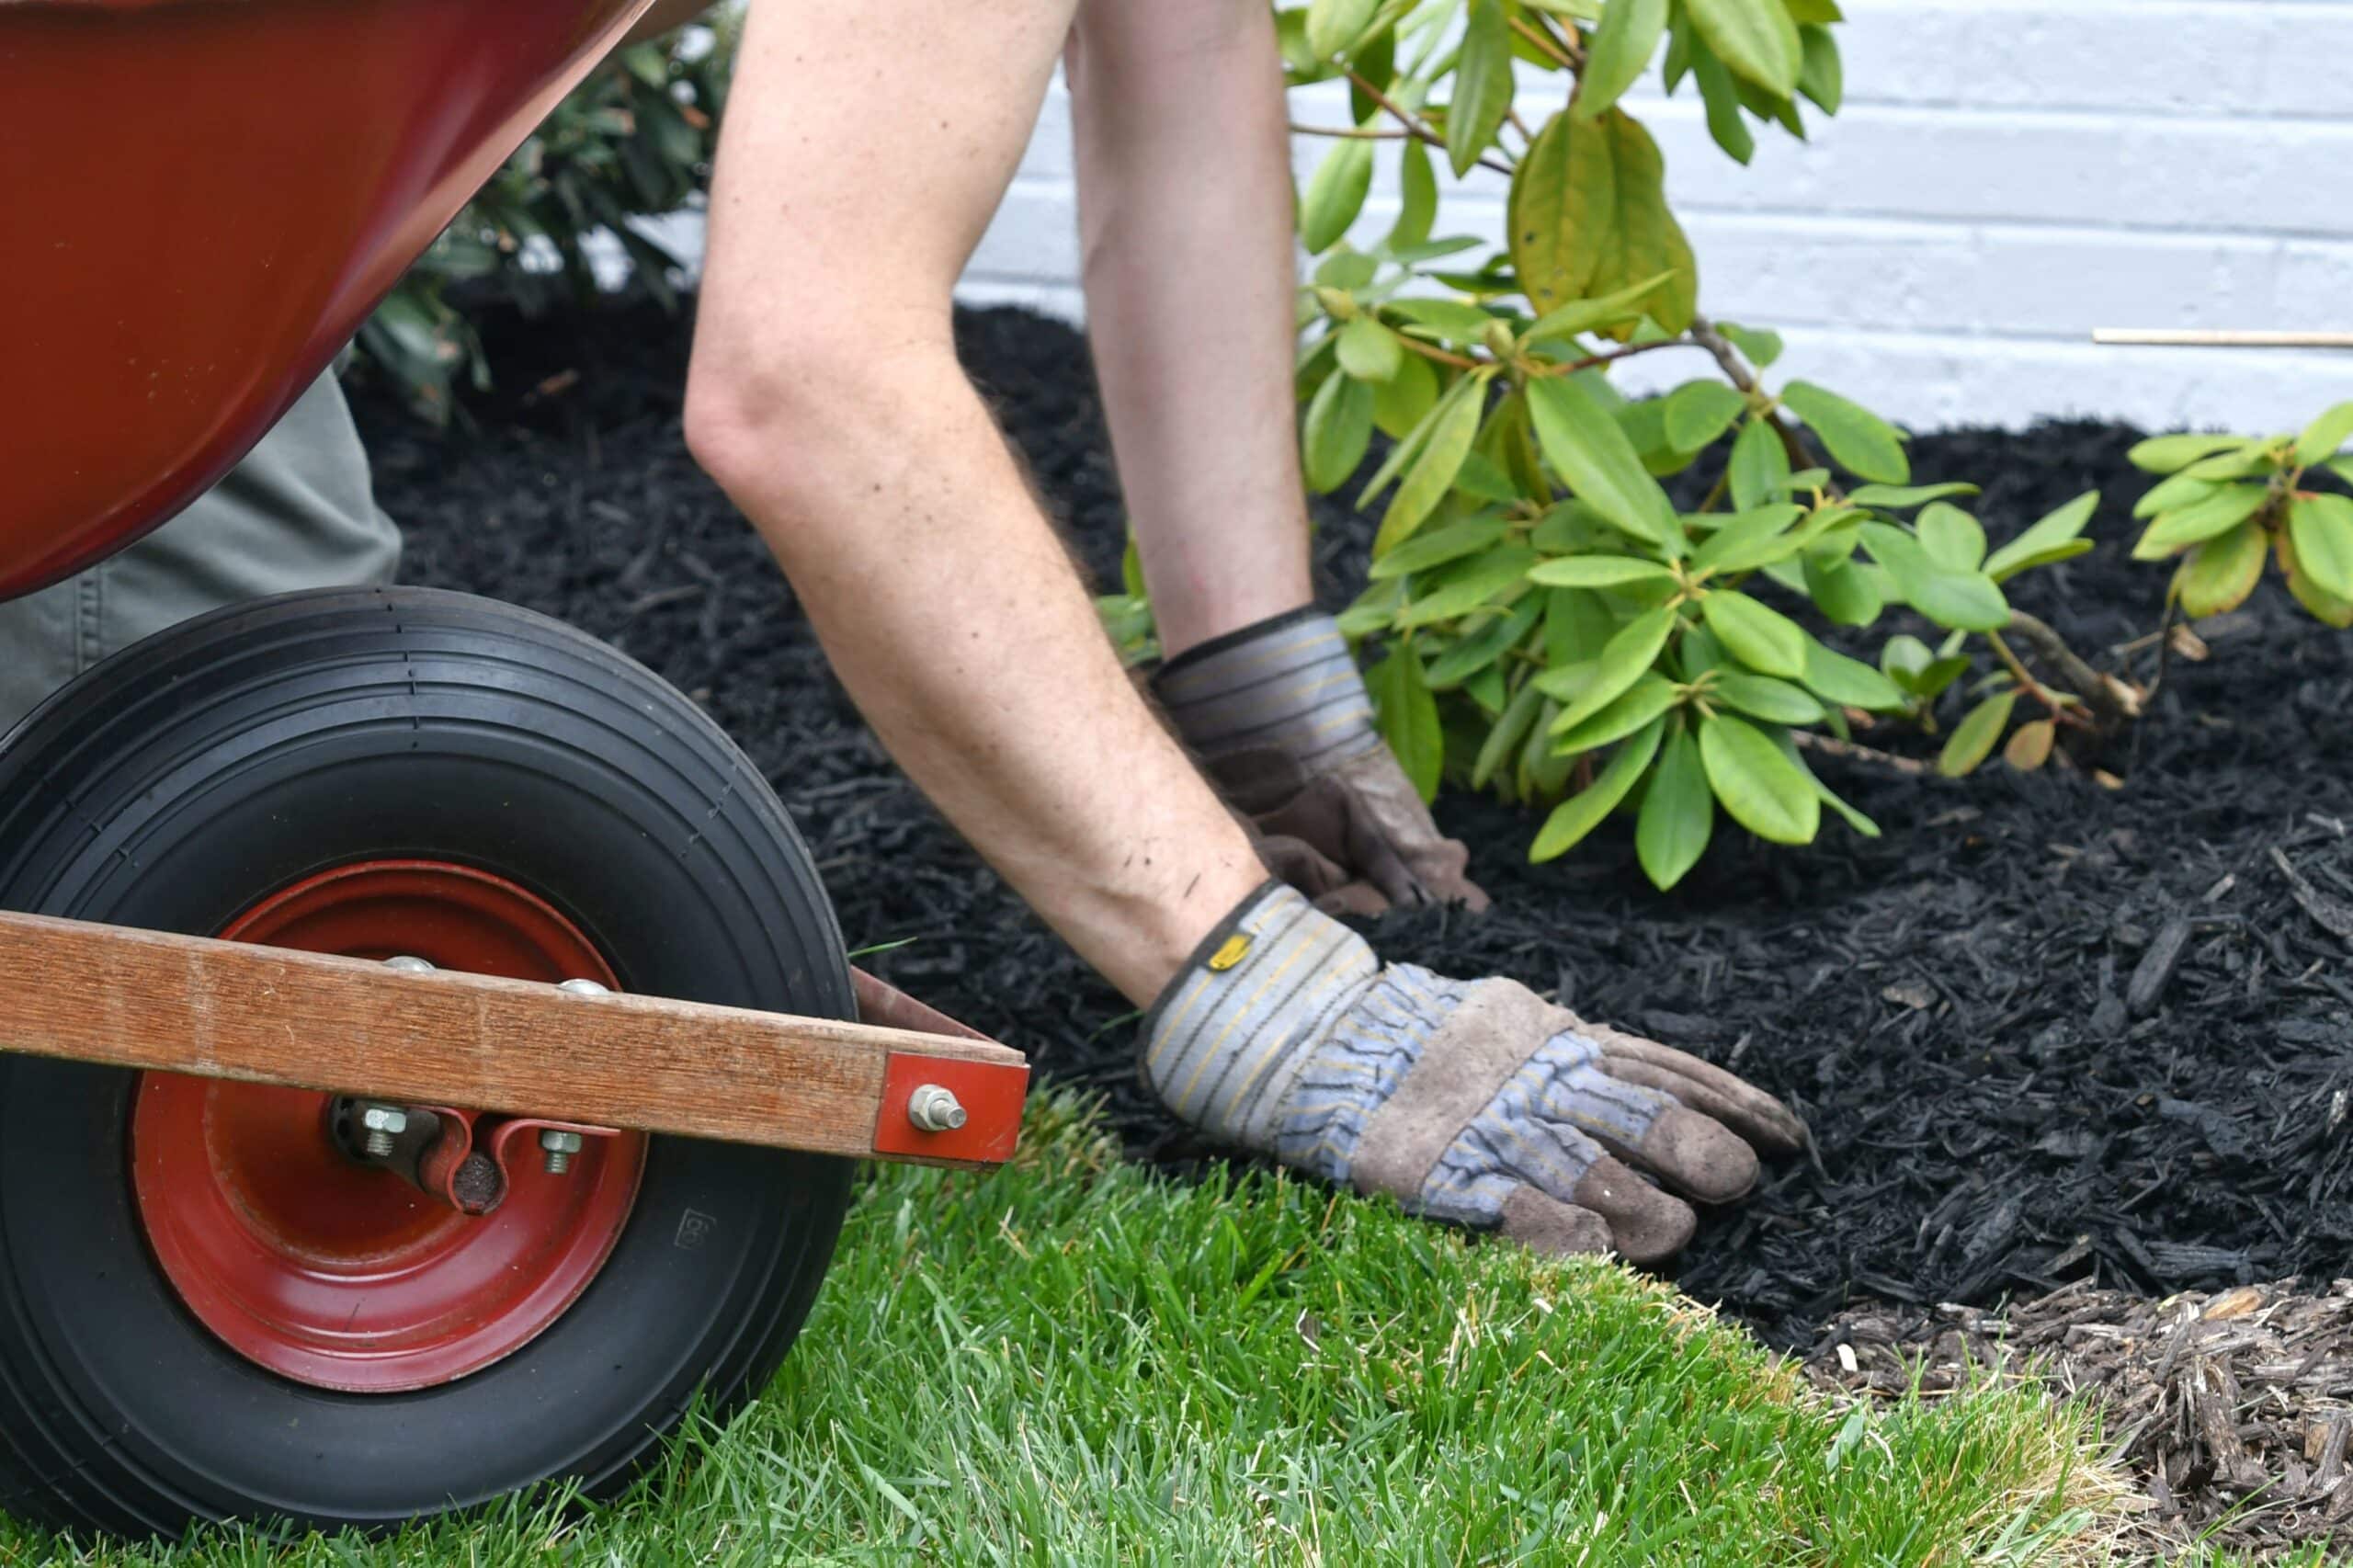 Our services 10 | man doing yard work spreading mulch around landsc 2022 11 14 03 31 46 utc scaled